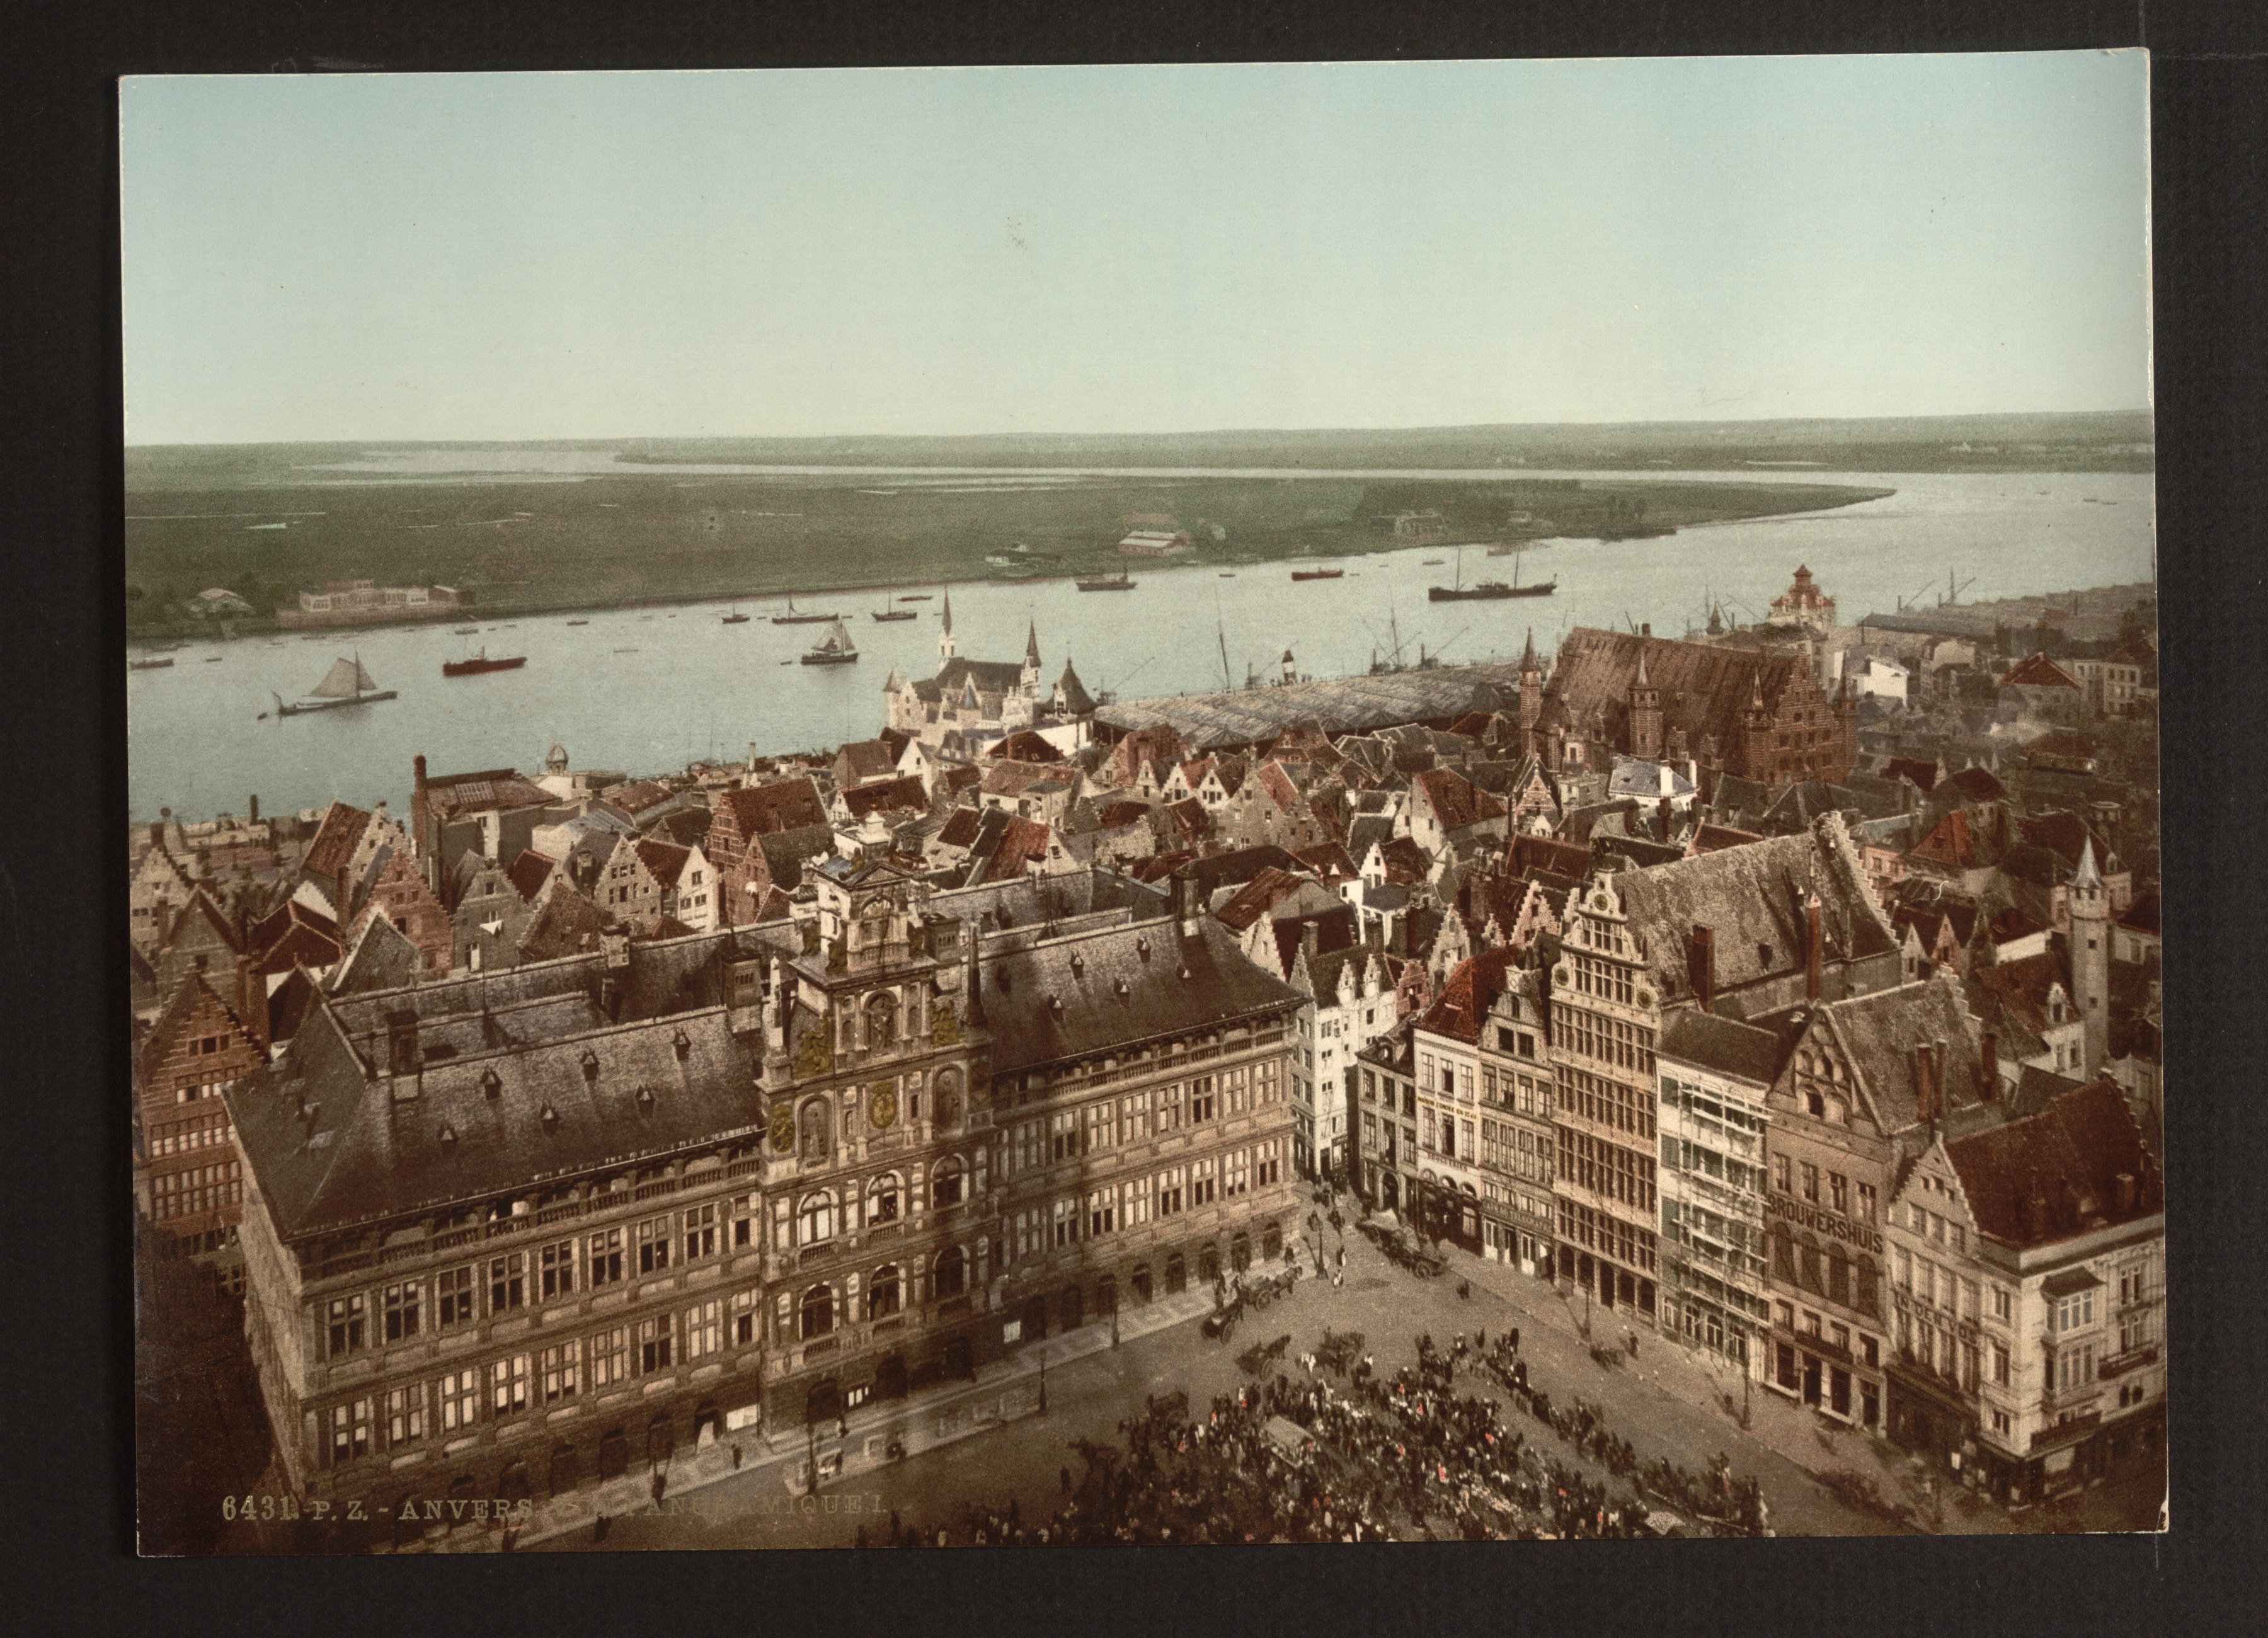 Antwerp and the River Scheldt, photochrom (unedited original) - Antwerp and the Scheldt, Belgium (ca. 1890-1900)